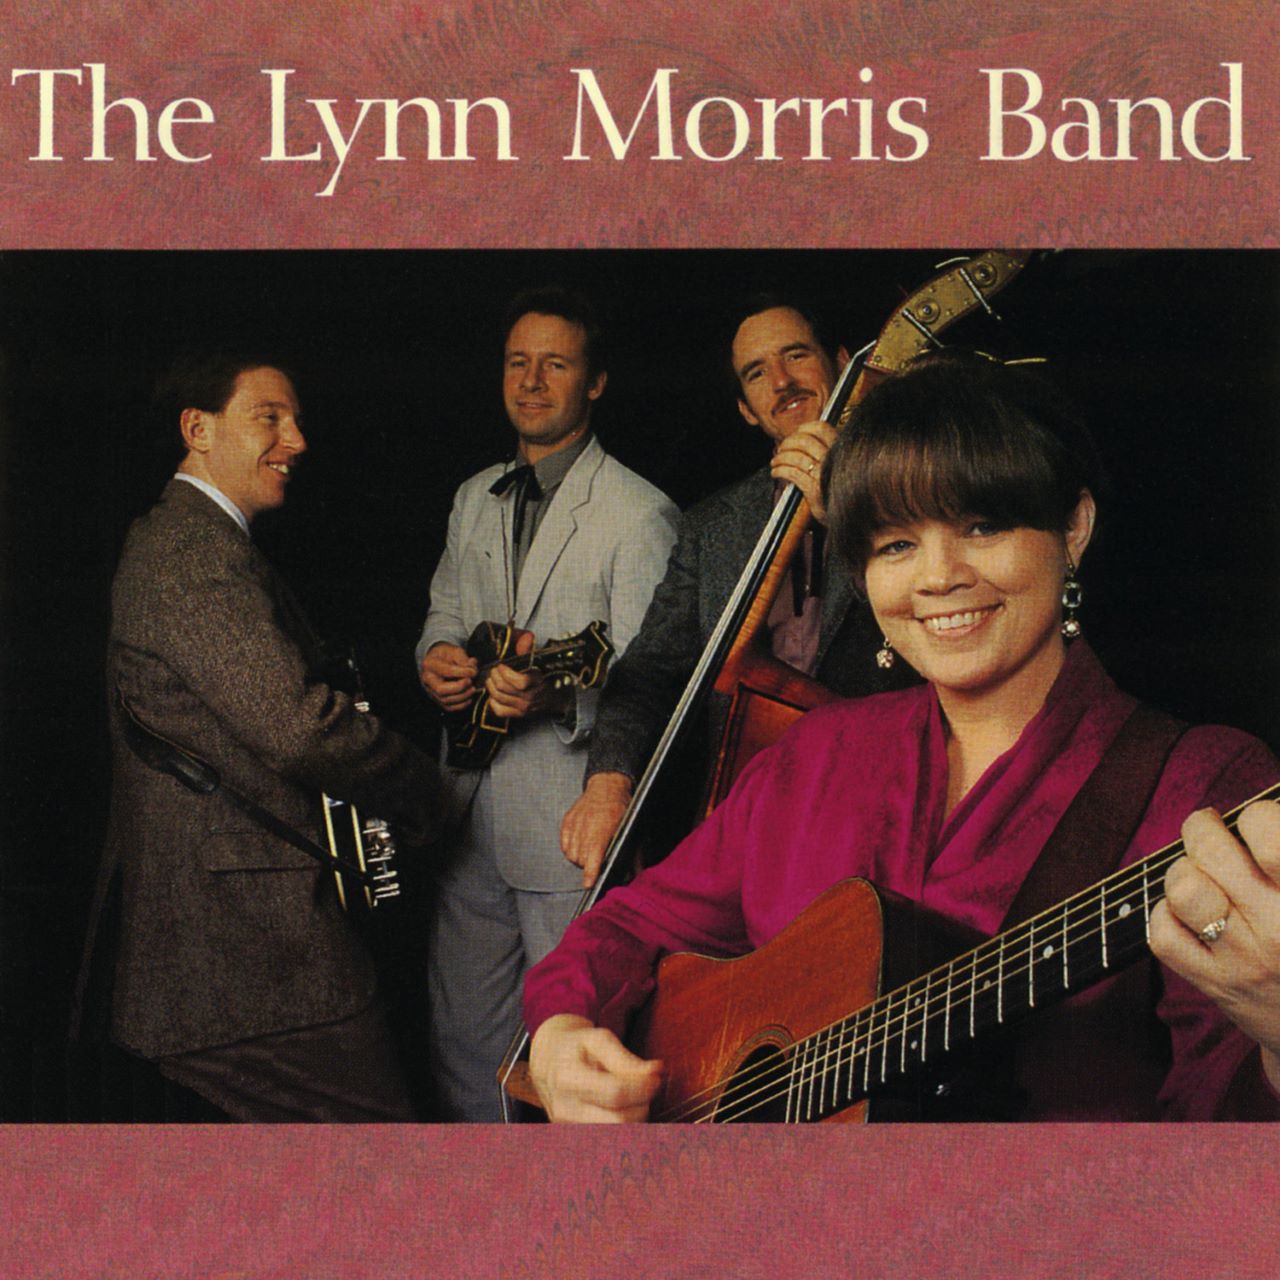 Lynn Morris Band